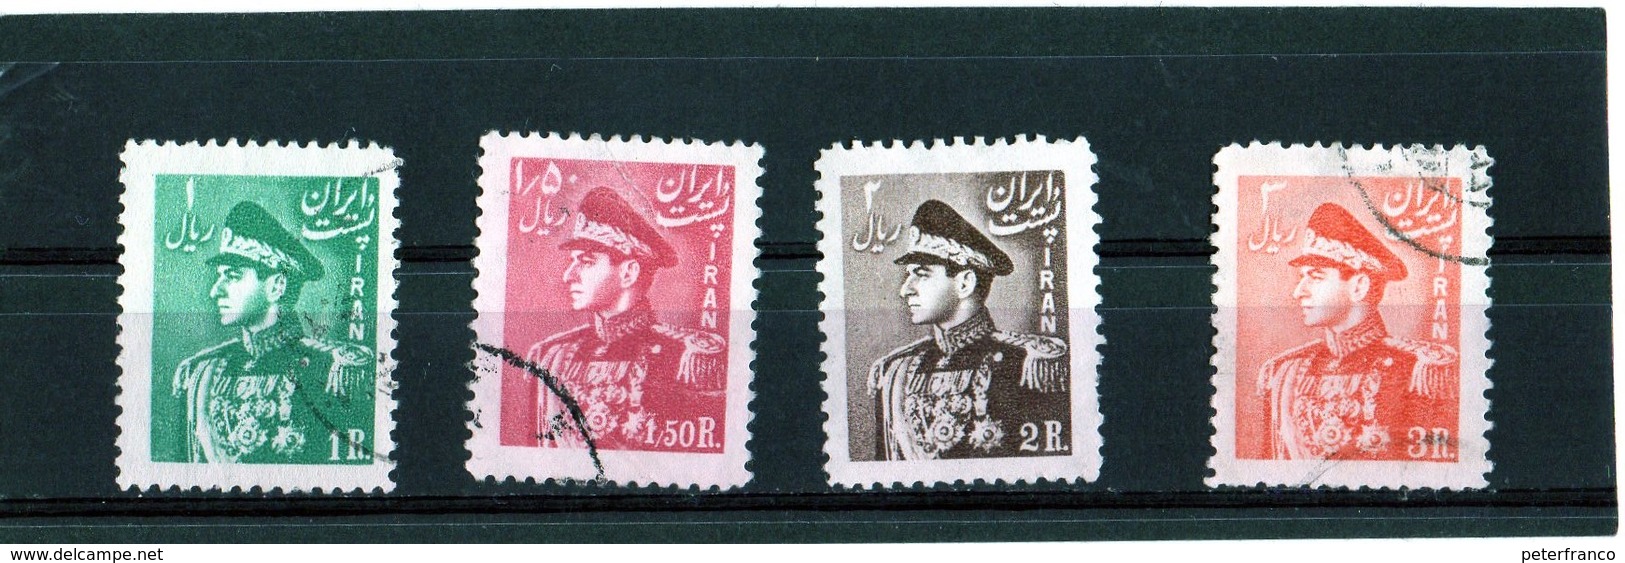 B - 1951 Iran - Mohammad Reza Shah Pahlavi - Iran